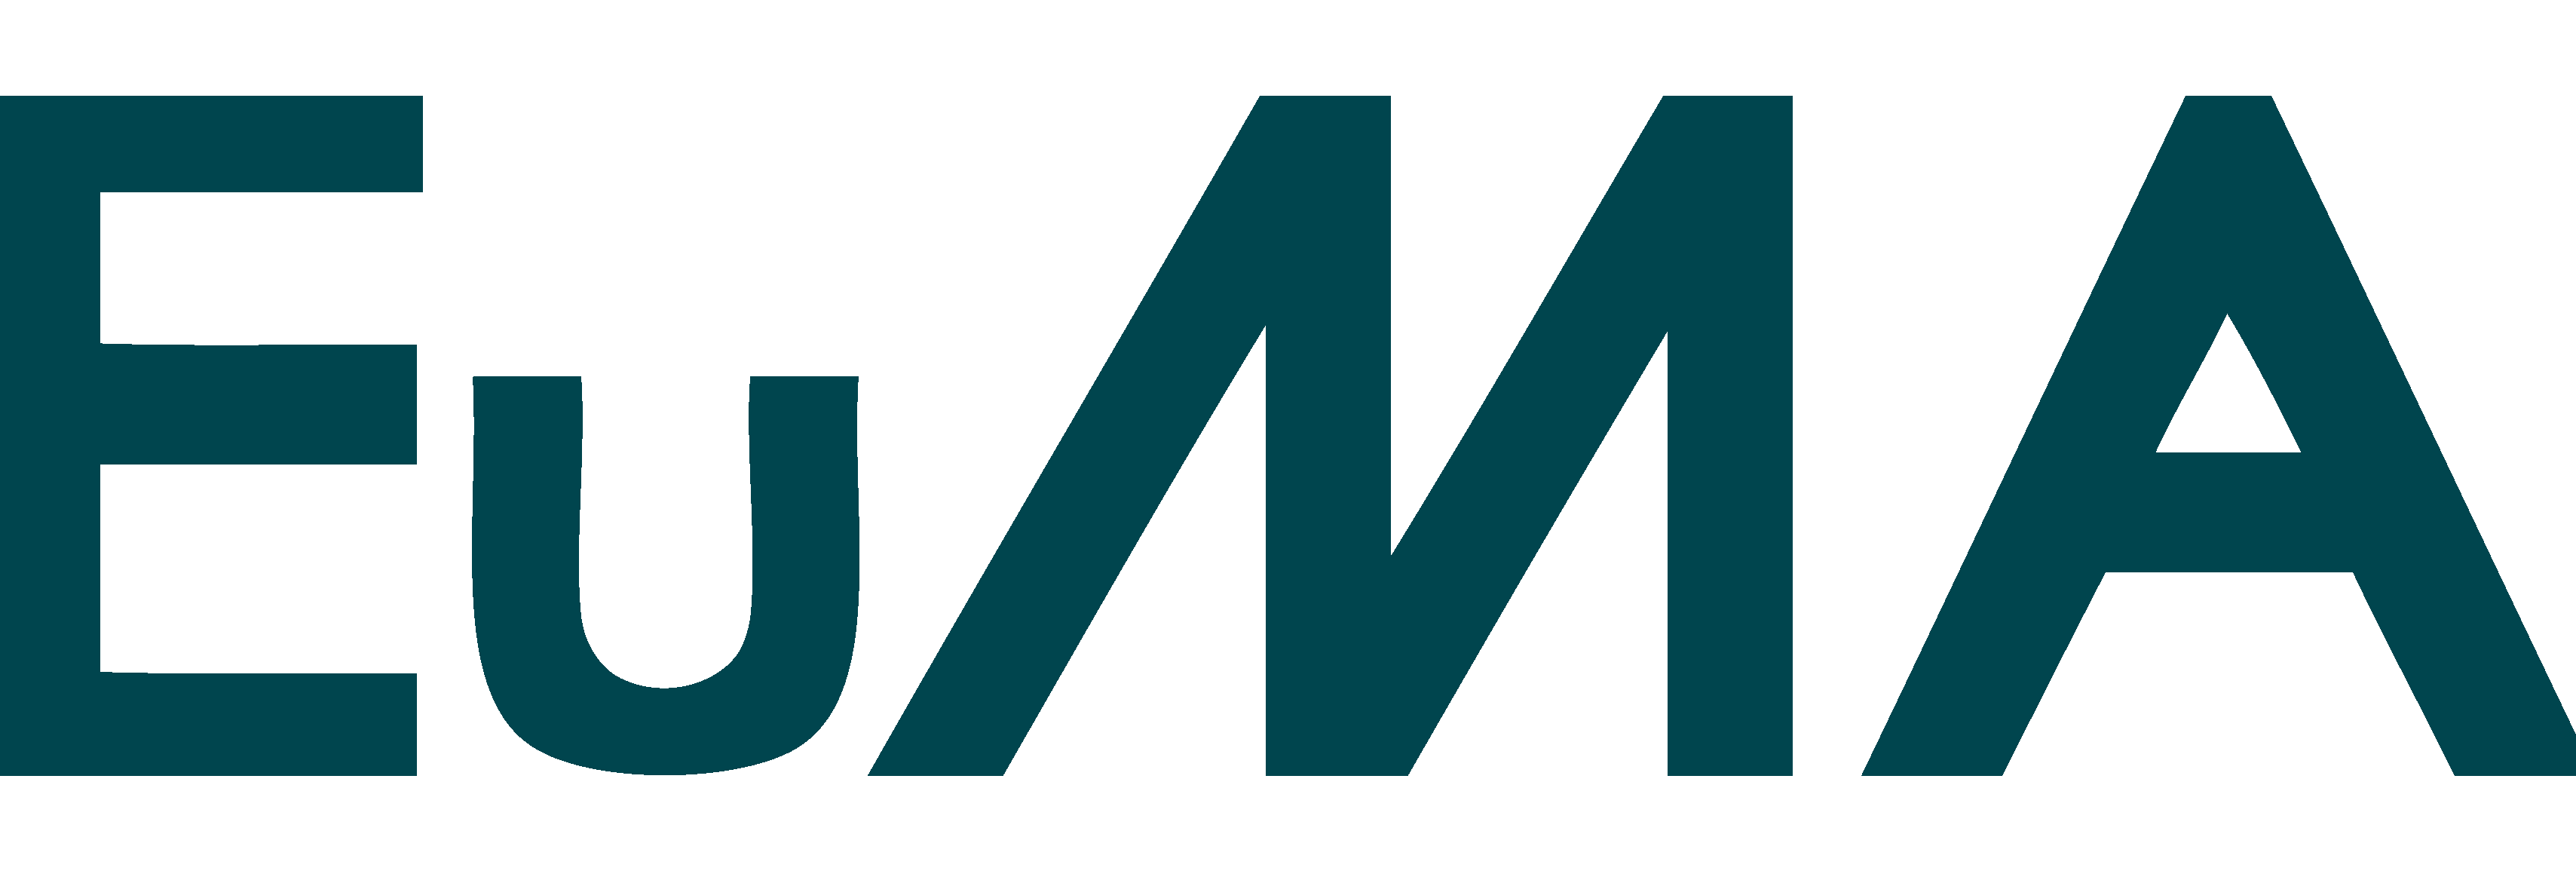 European Microwave Association logo